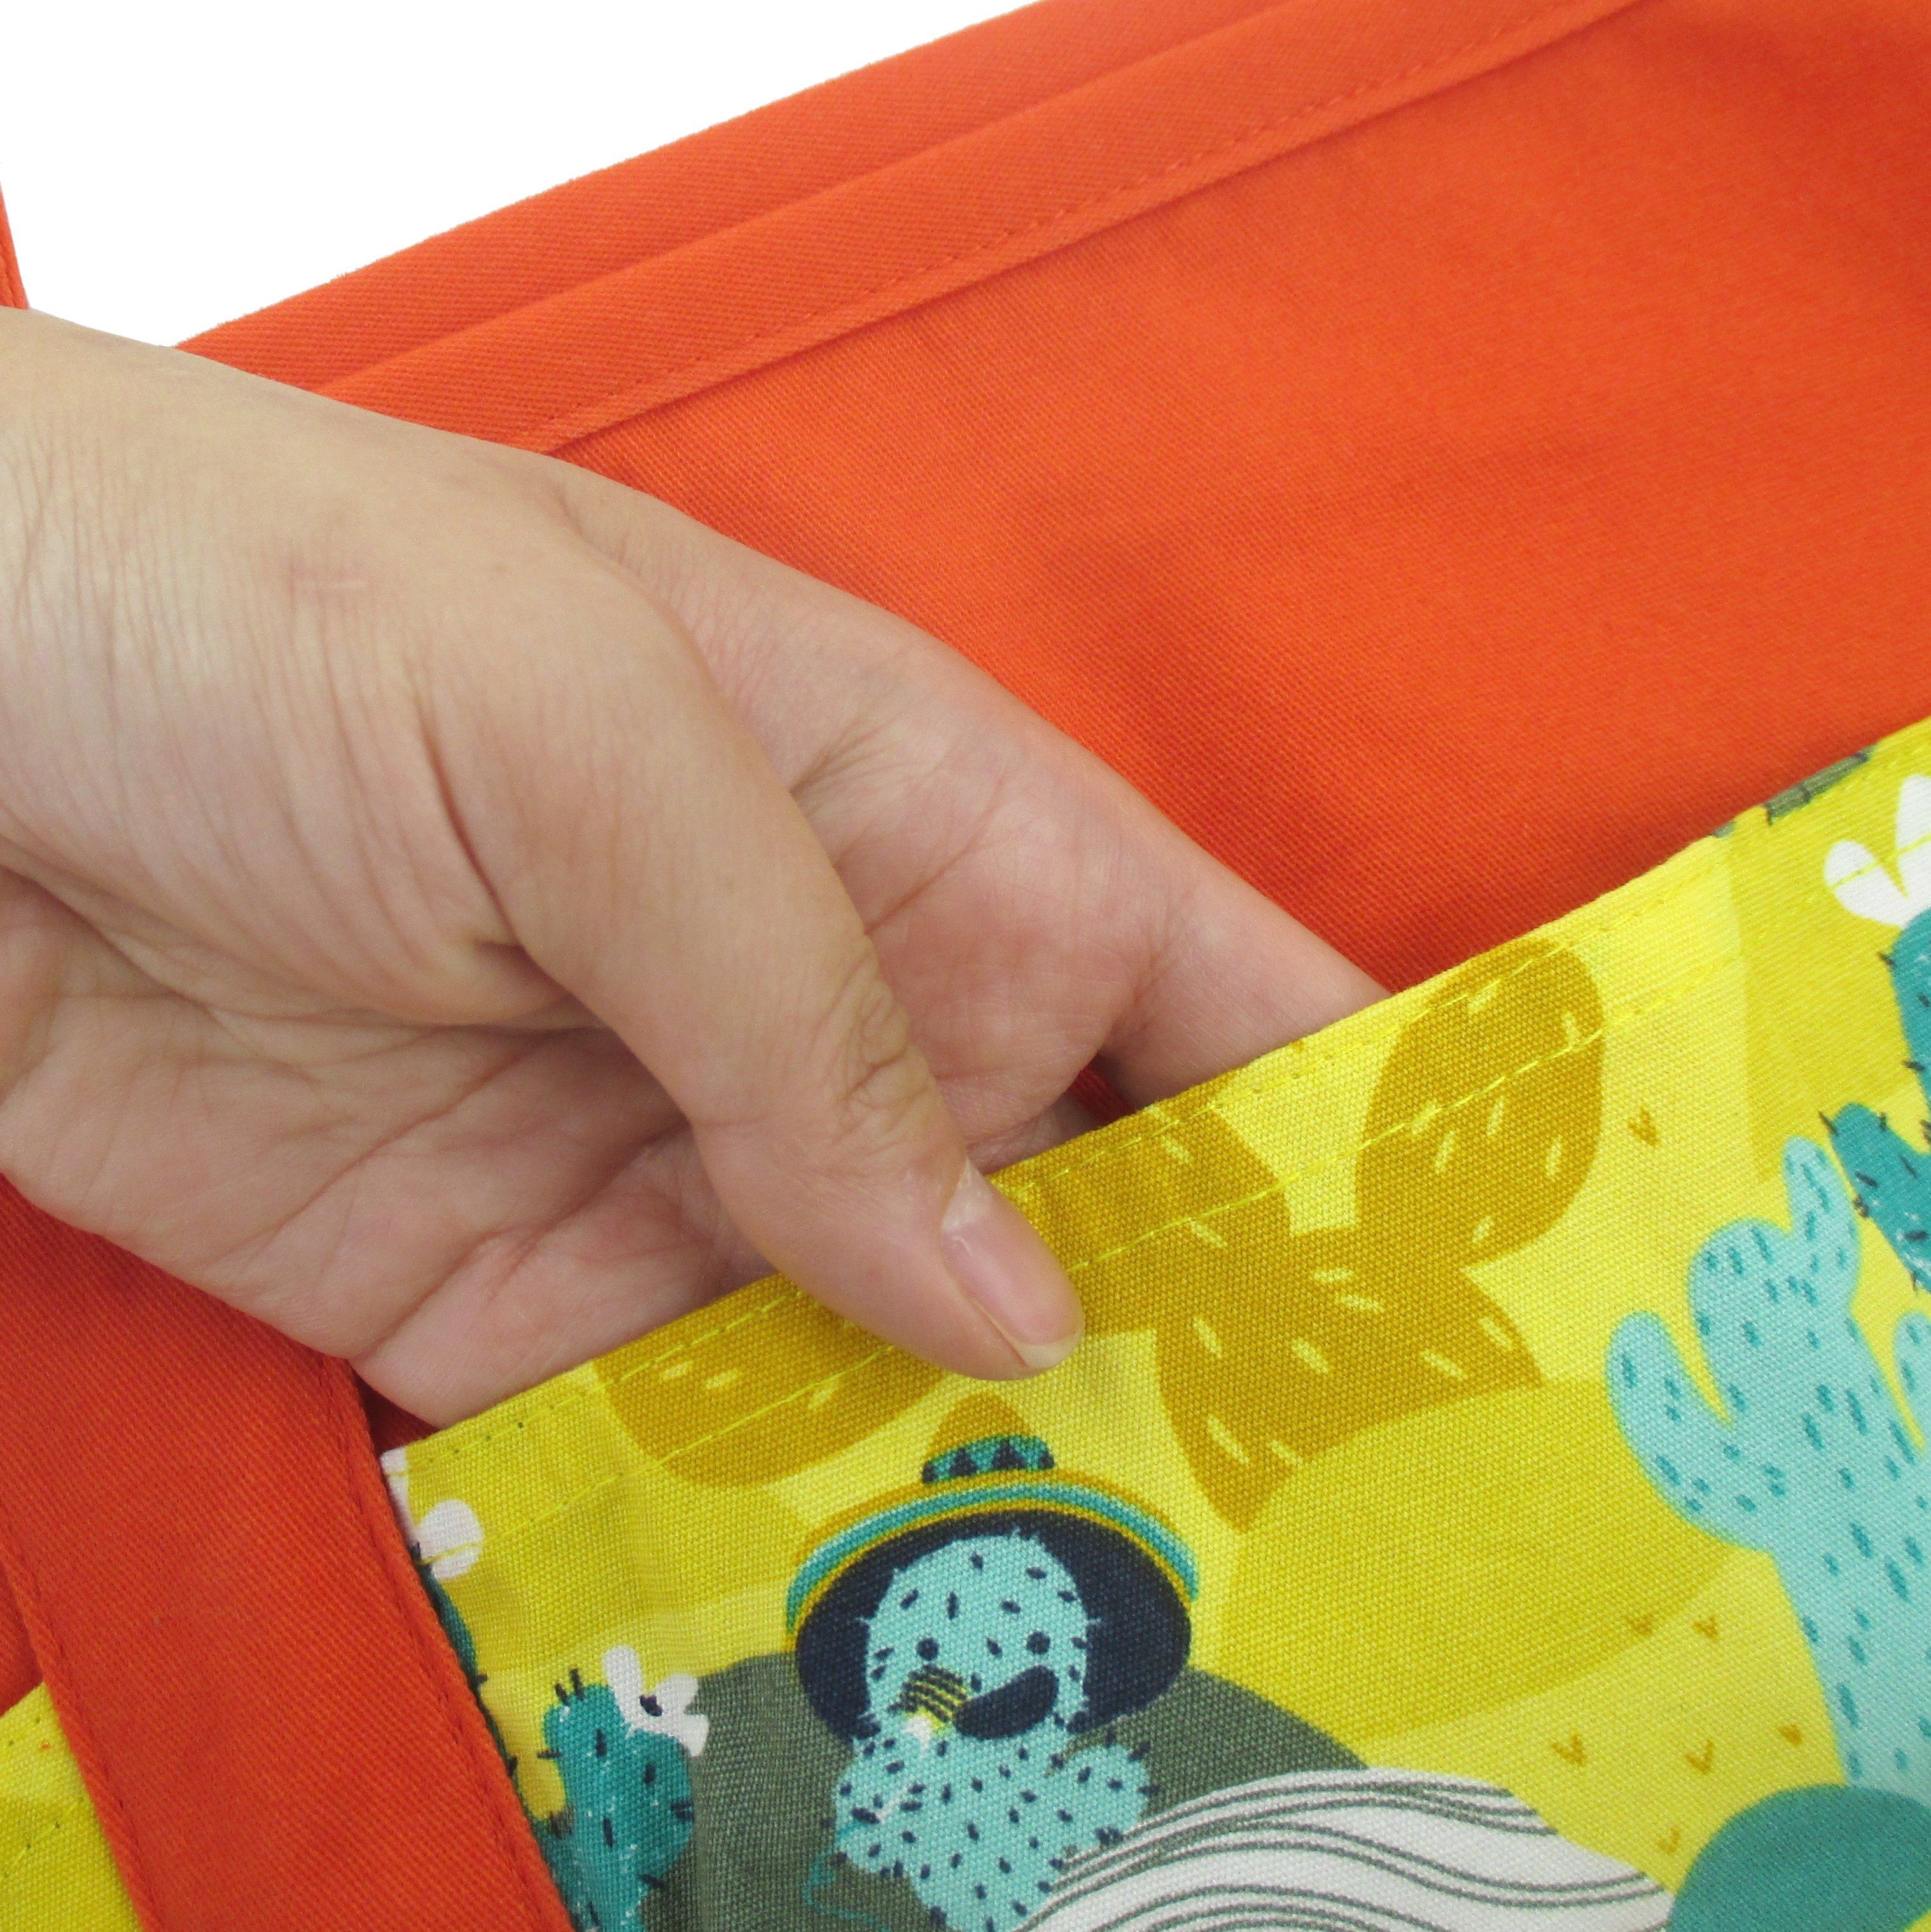 Bright Orange Desert Themed Cactus Pattern Large Utility Shoulder Tote Shopper Bag with Pockets